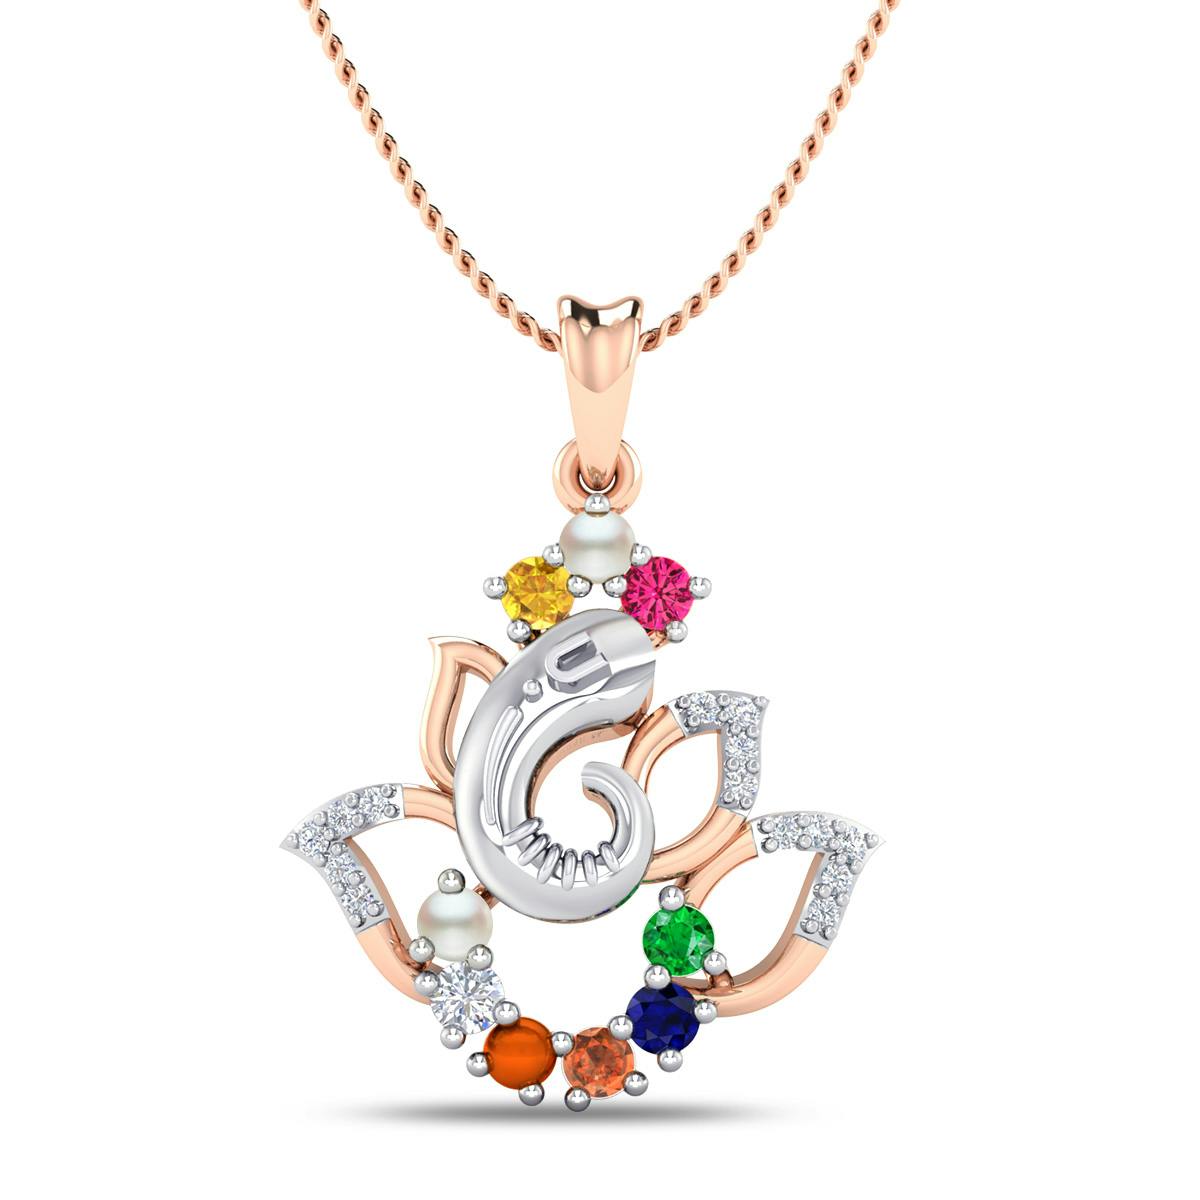 Ati Sundar Ganesh pendant